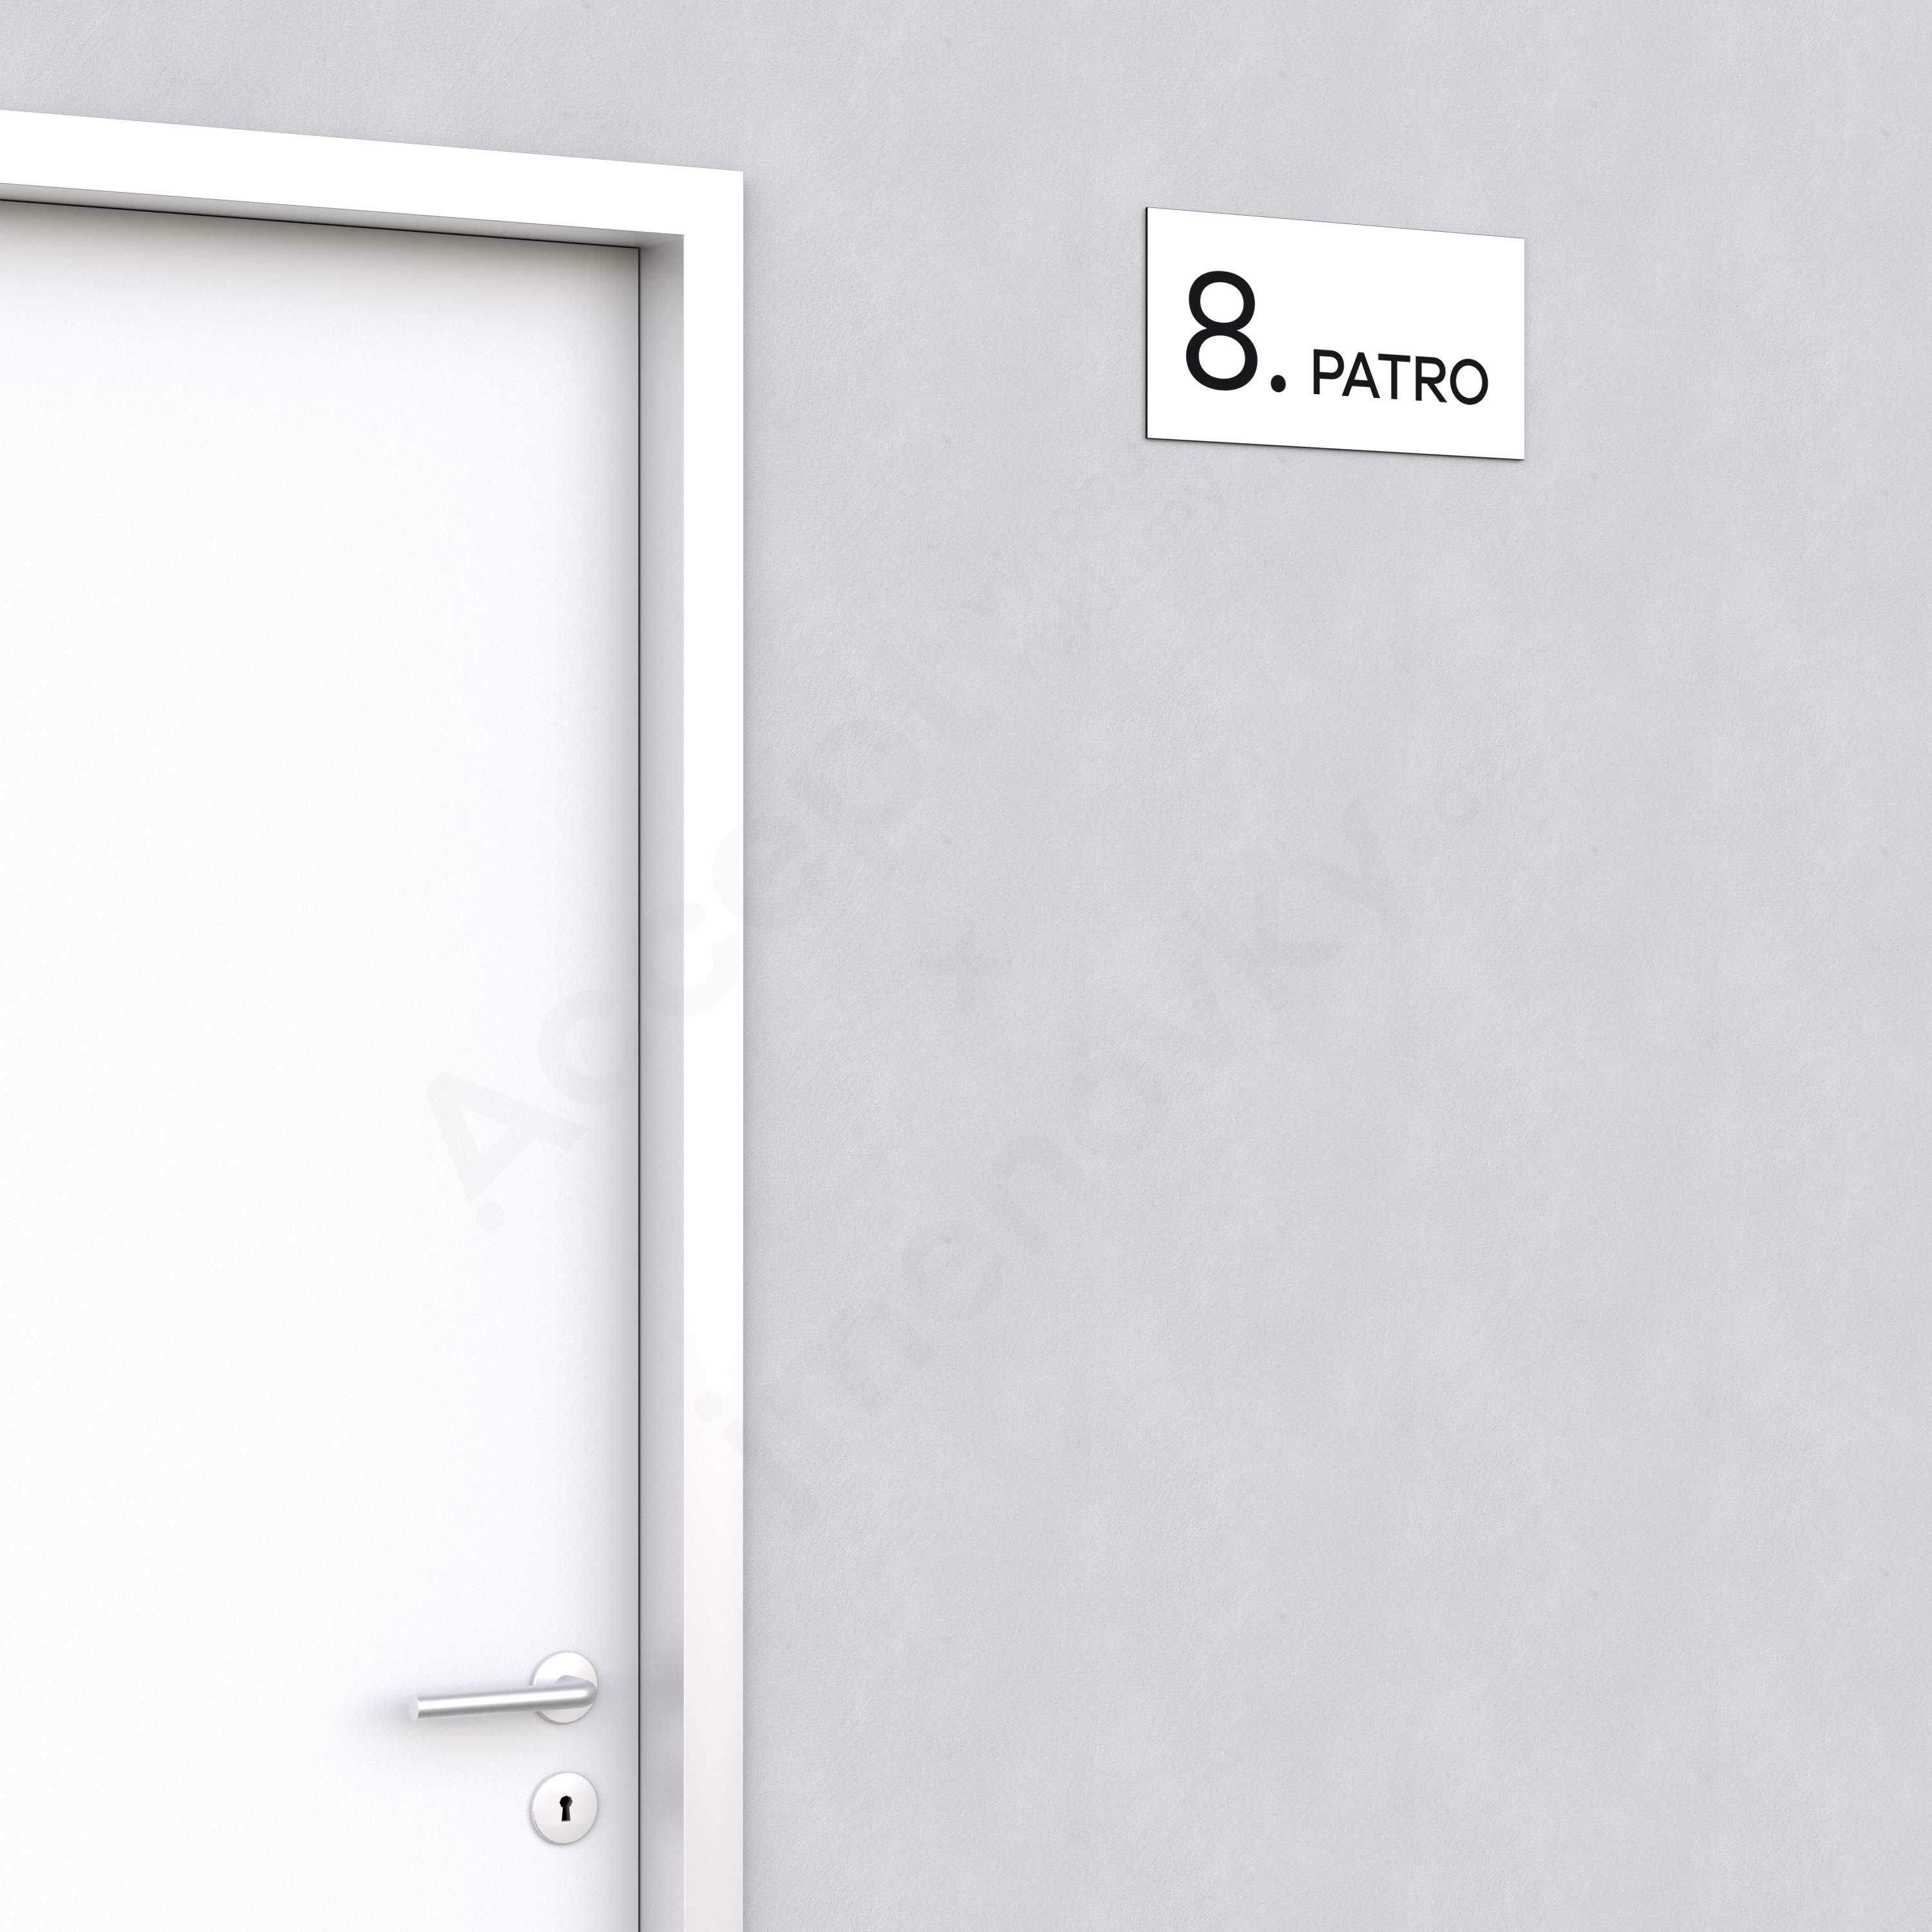 Označení podlaží "8. PATRO" - bílá tabulka - černý popis - náhled